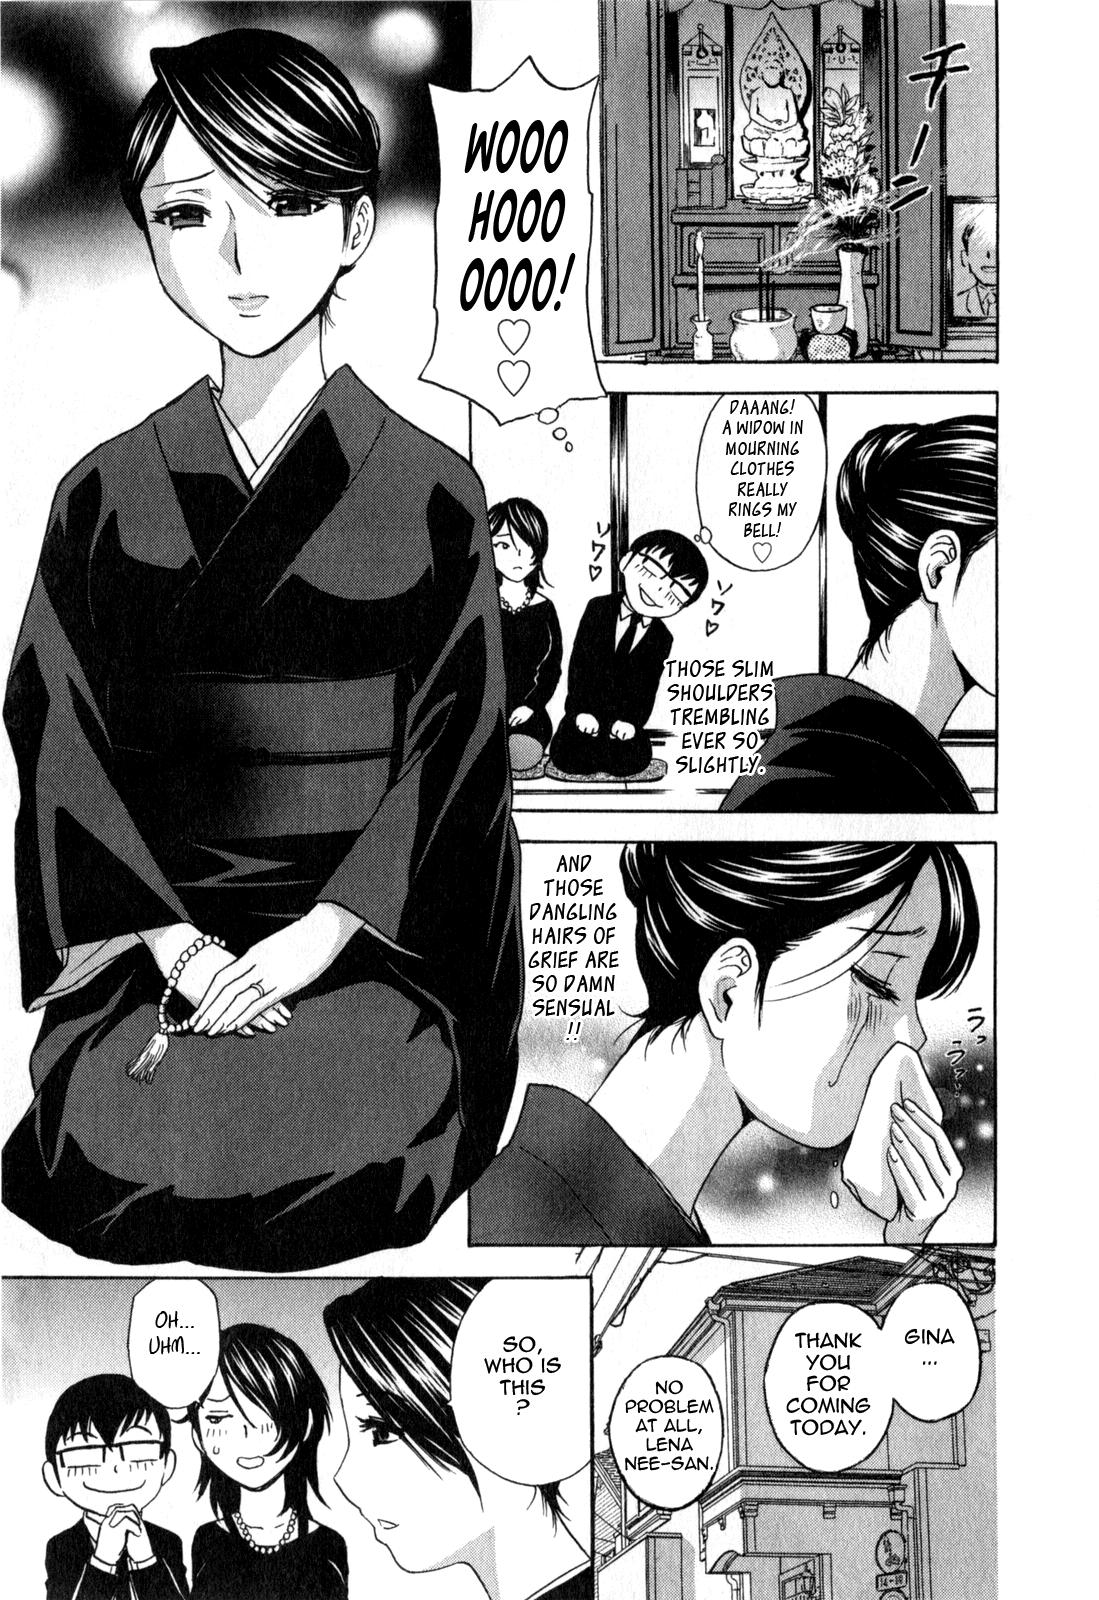 [Hidemaru] Life with Married Women Just Like a Manga 3 - Ch. 1-5 [English] {Tadanohito} 92